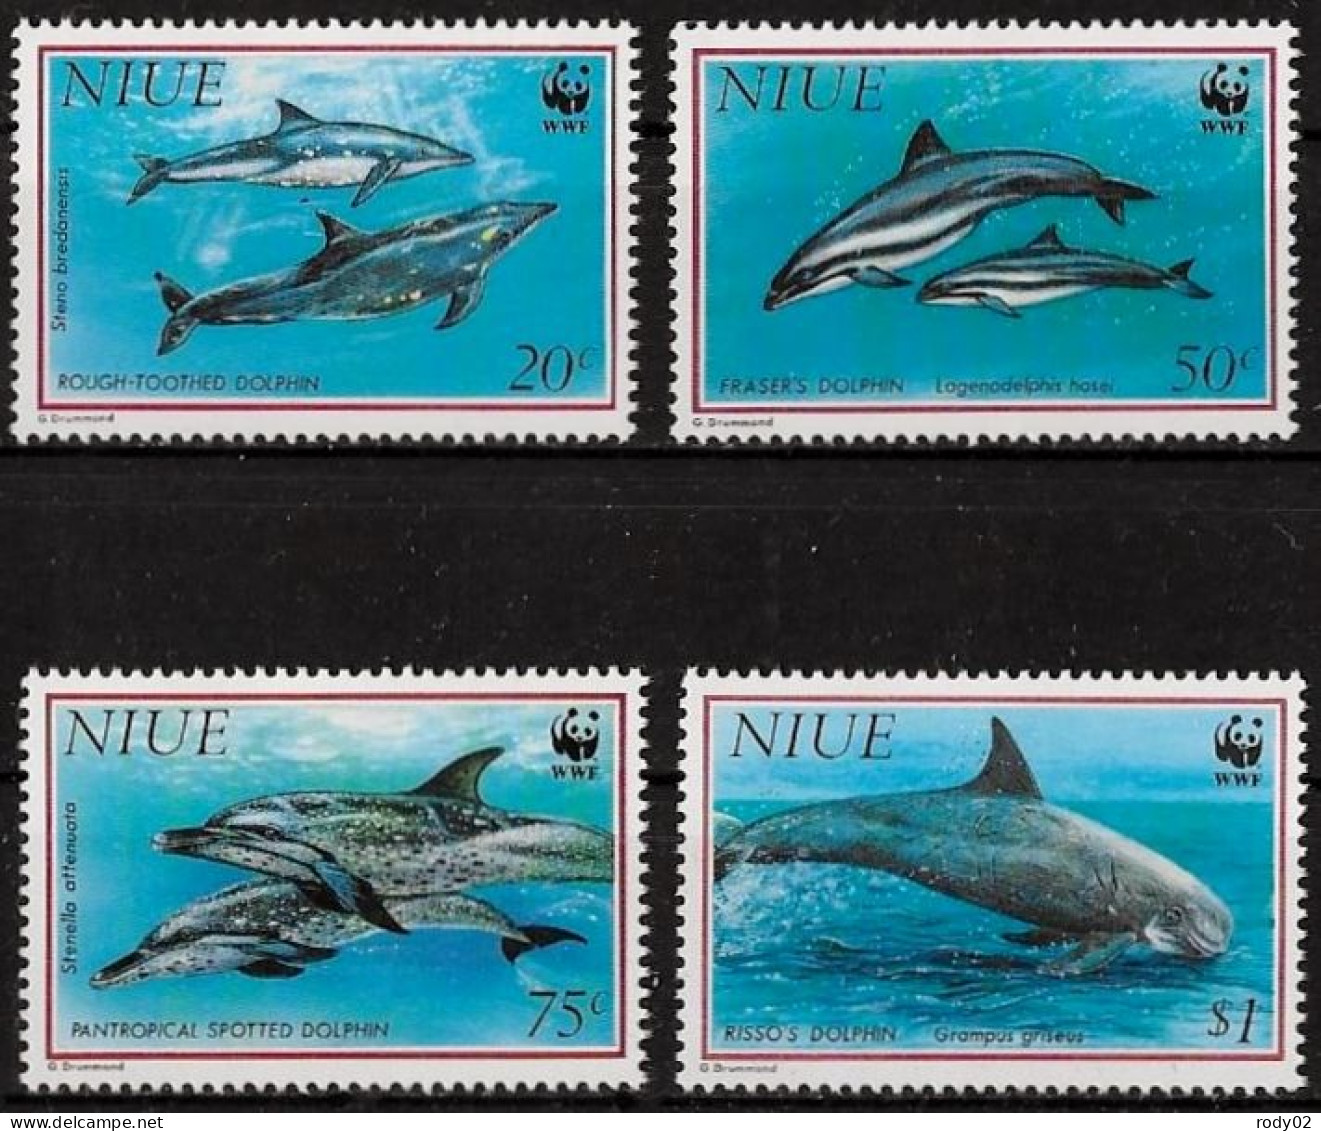 NIUE - DAUPHINS - WWF - N° 614 A 617 - NEUF** MNH - Dauphins